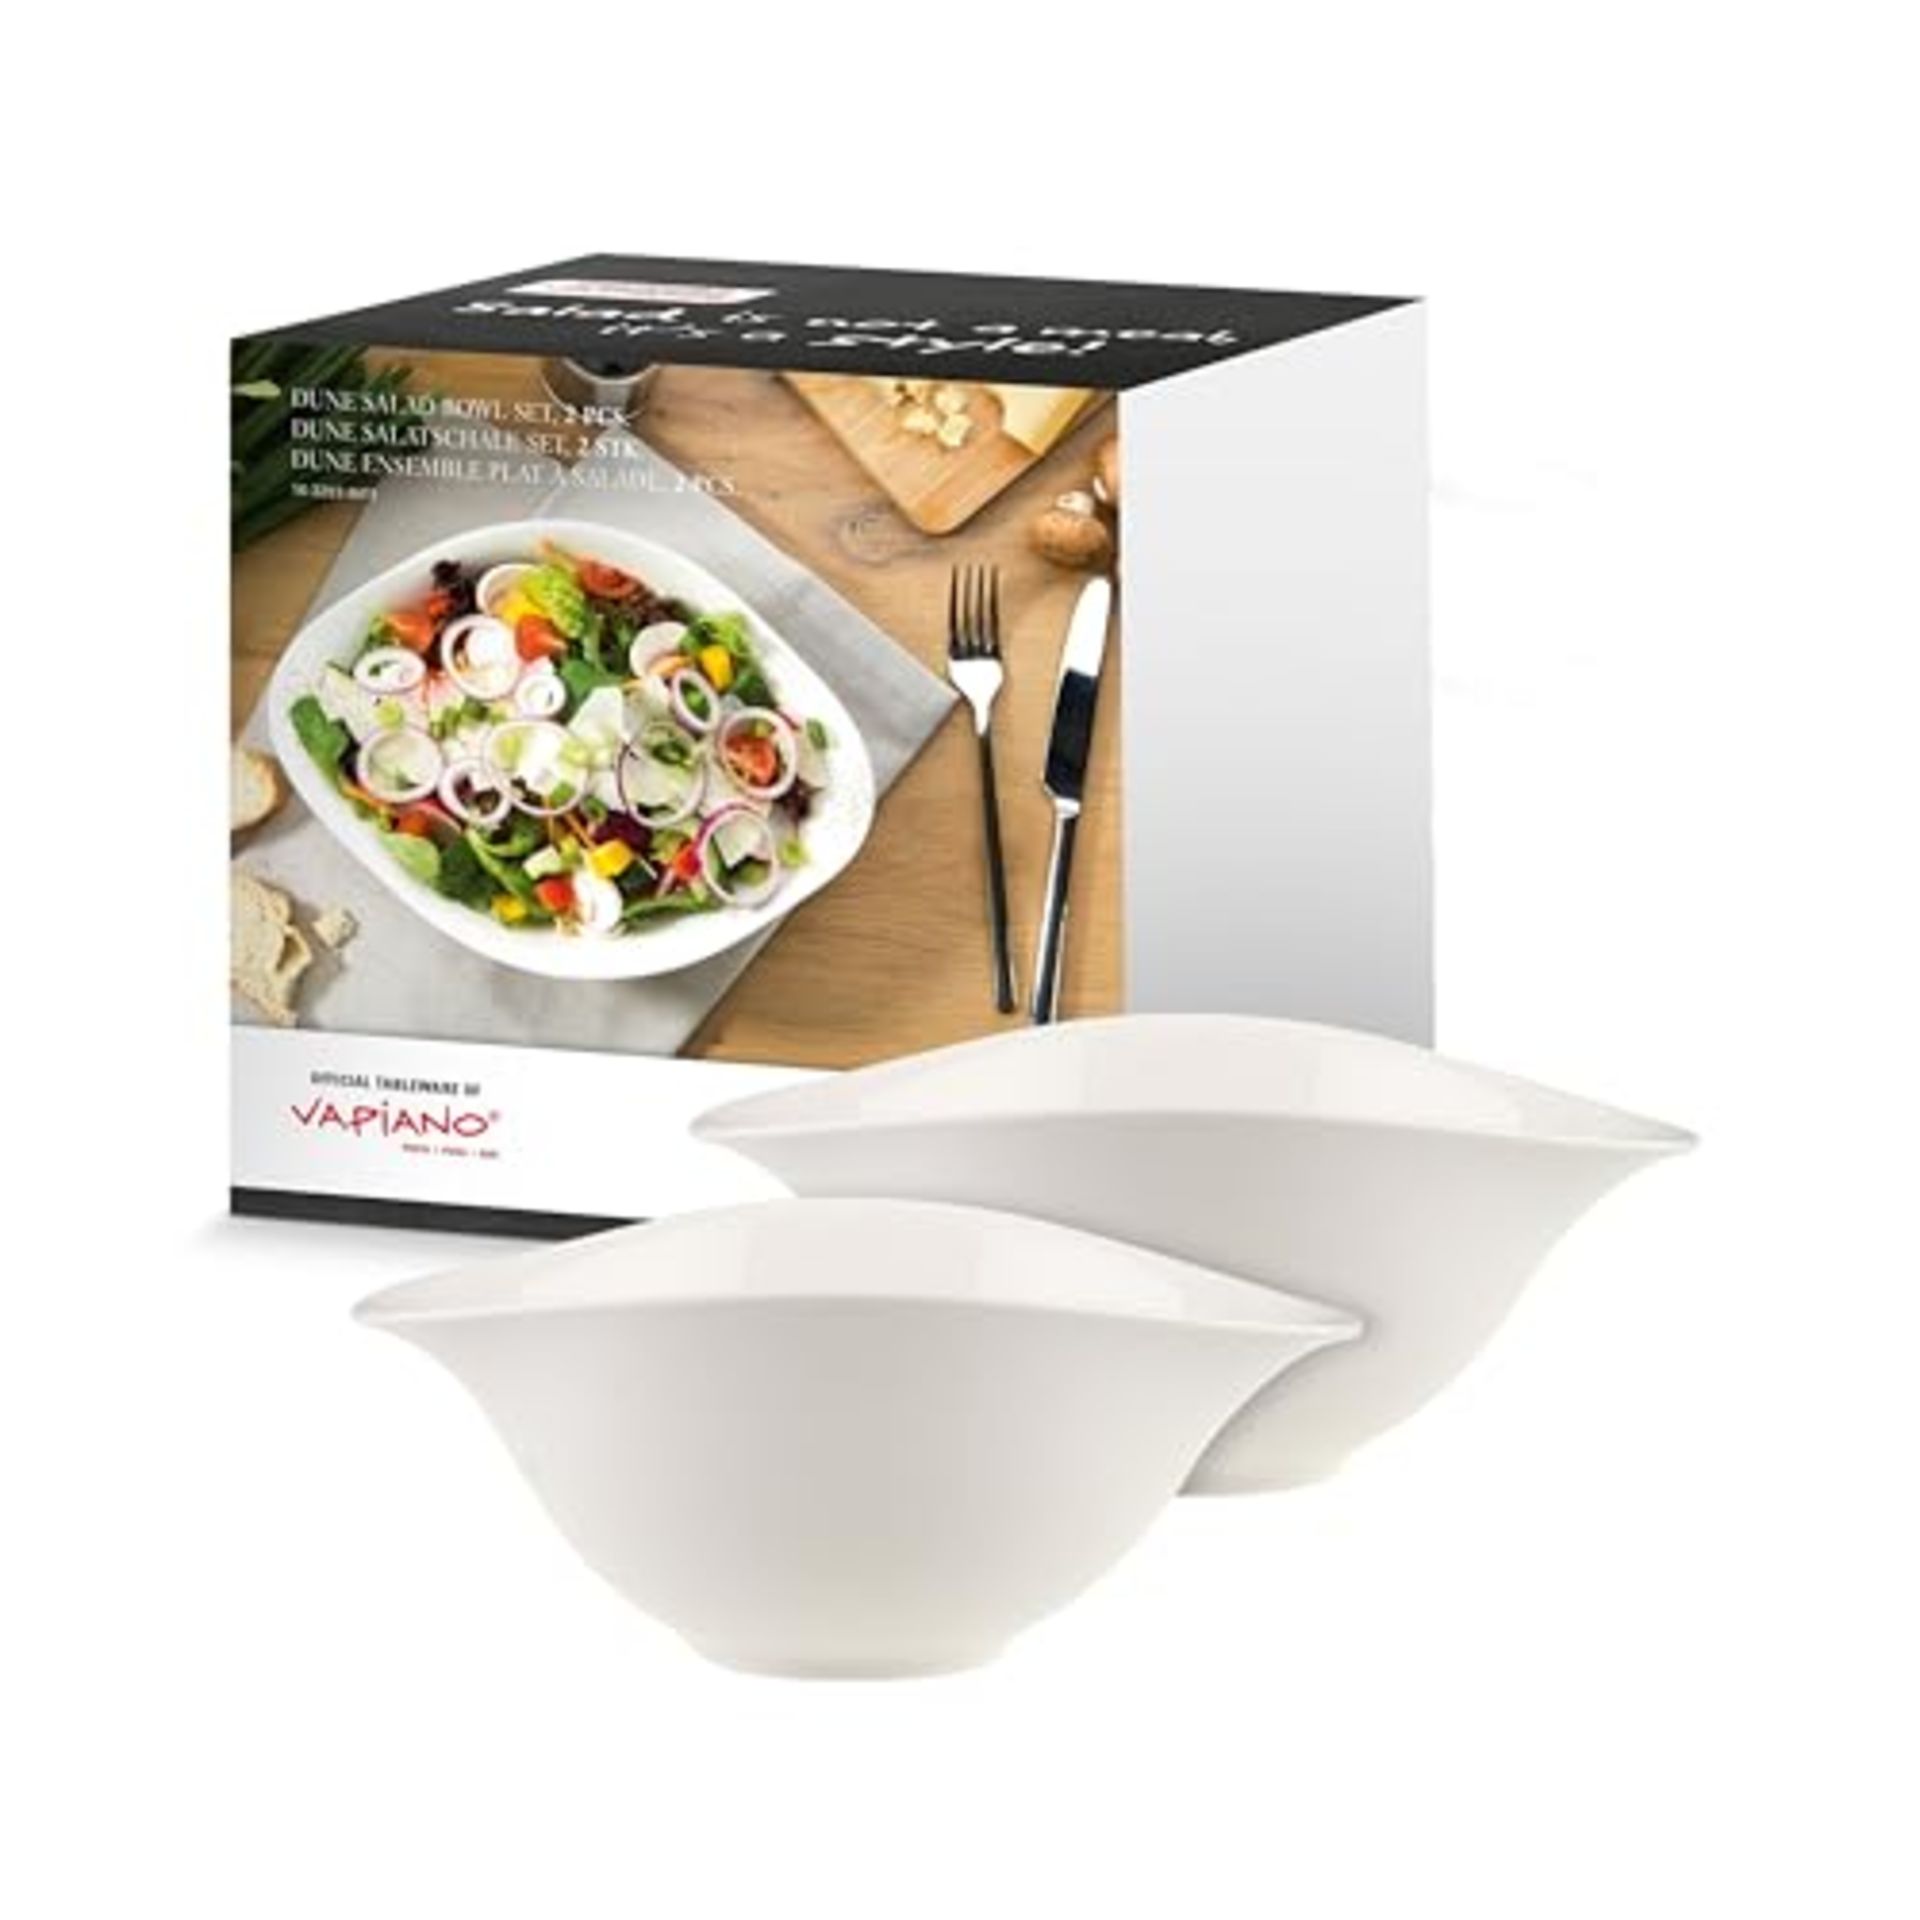 [INCOMPLETE] Villeroy & Boch - Vapiano salad dish Set, 2 Piece Tableware Set, Premium